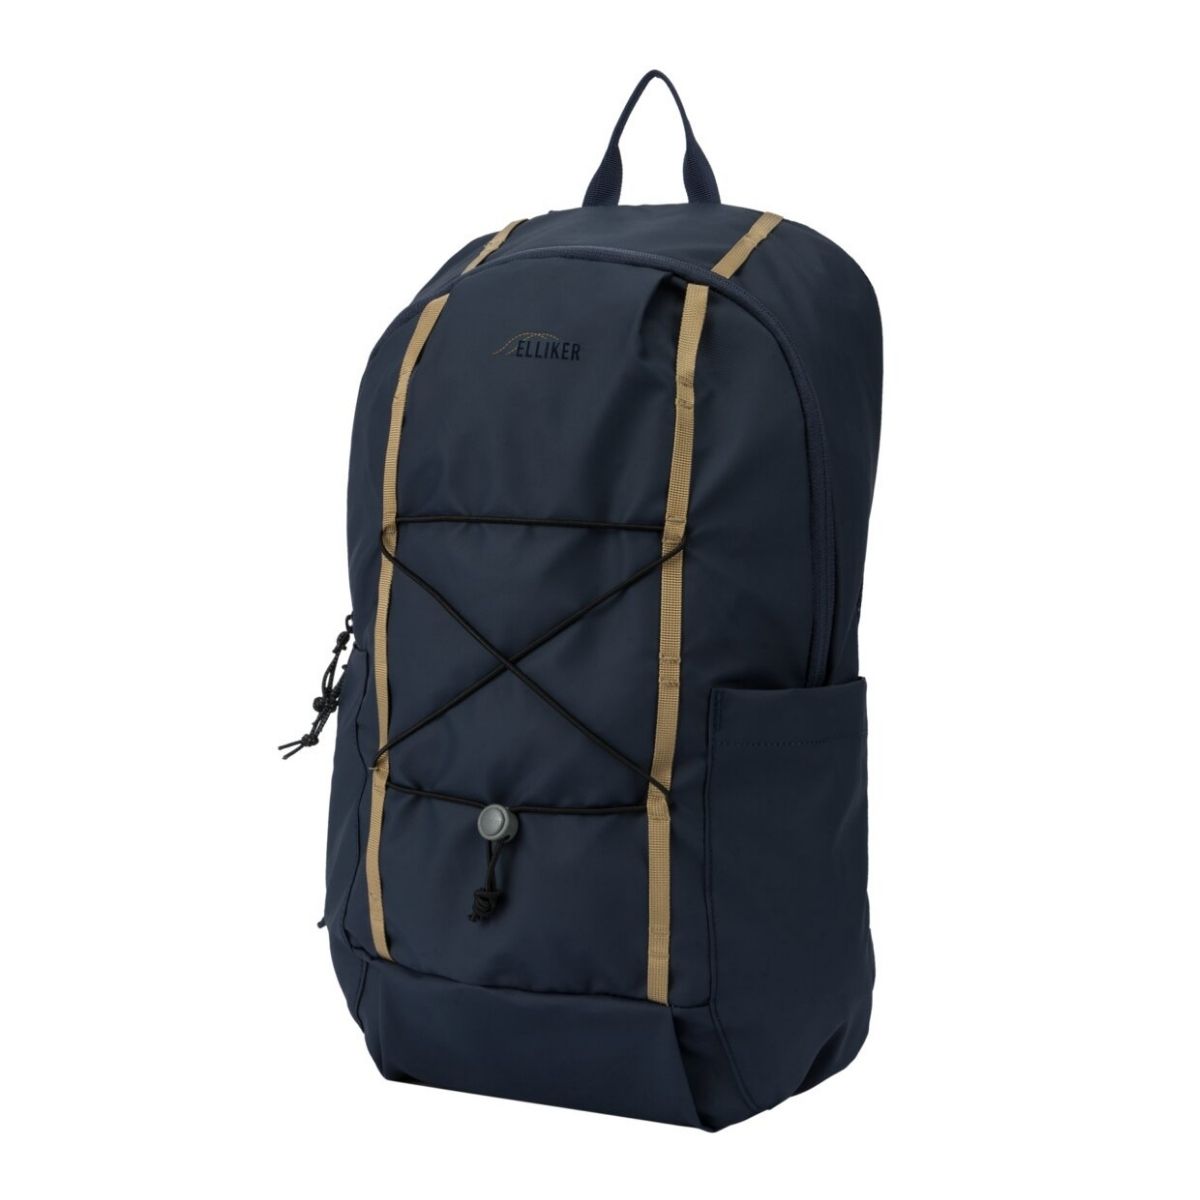 Keswik Zip Top Backpack 22L Navy - Rucksack